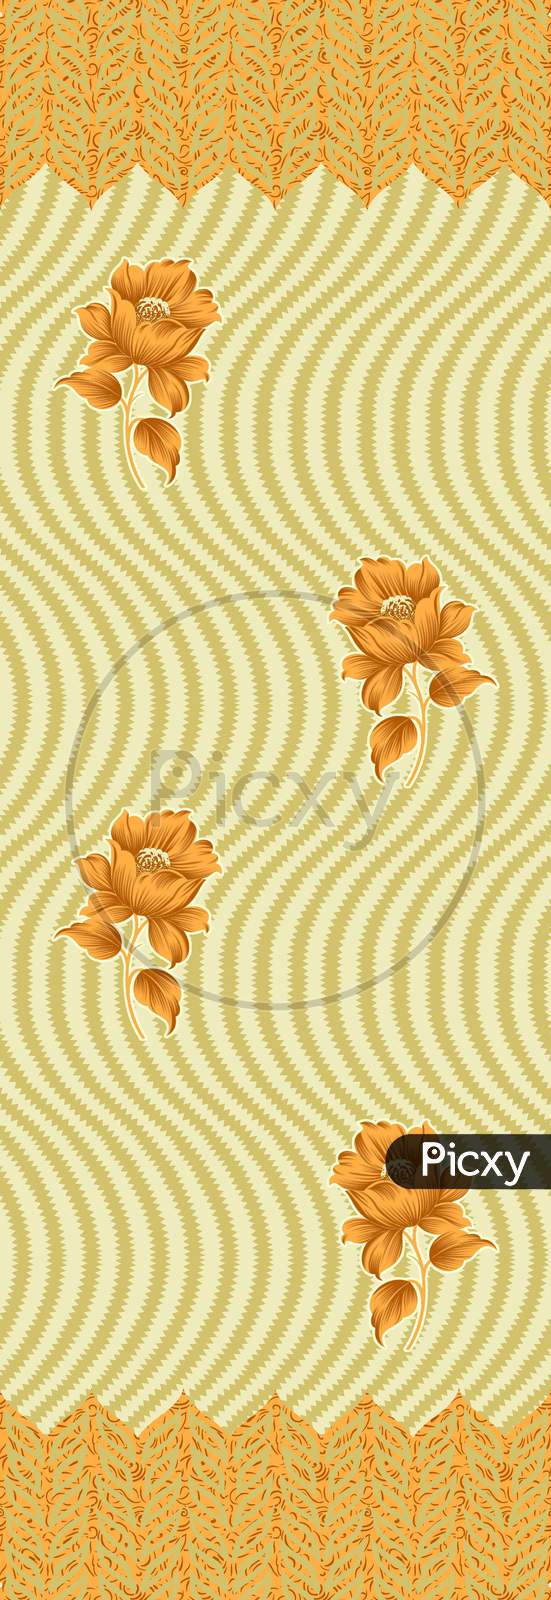 Decorative Flower Design With Digital Background